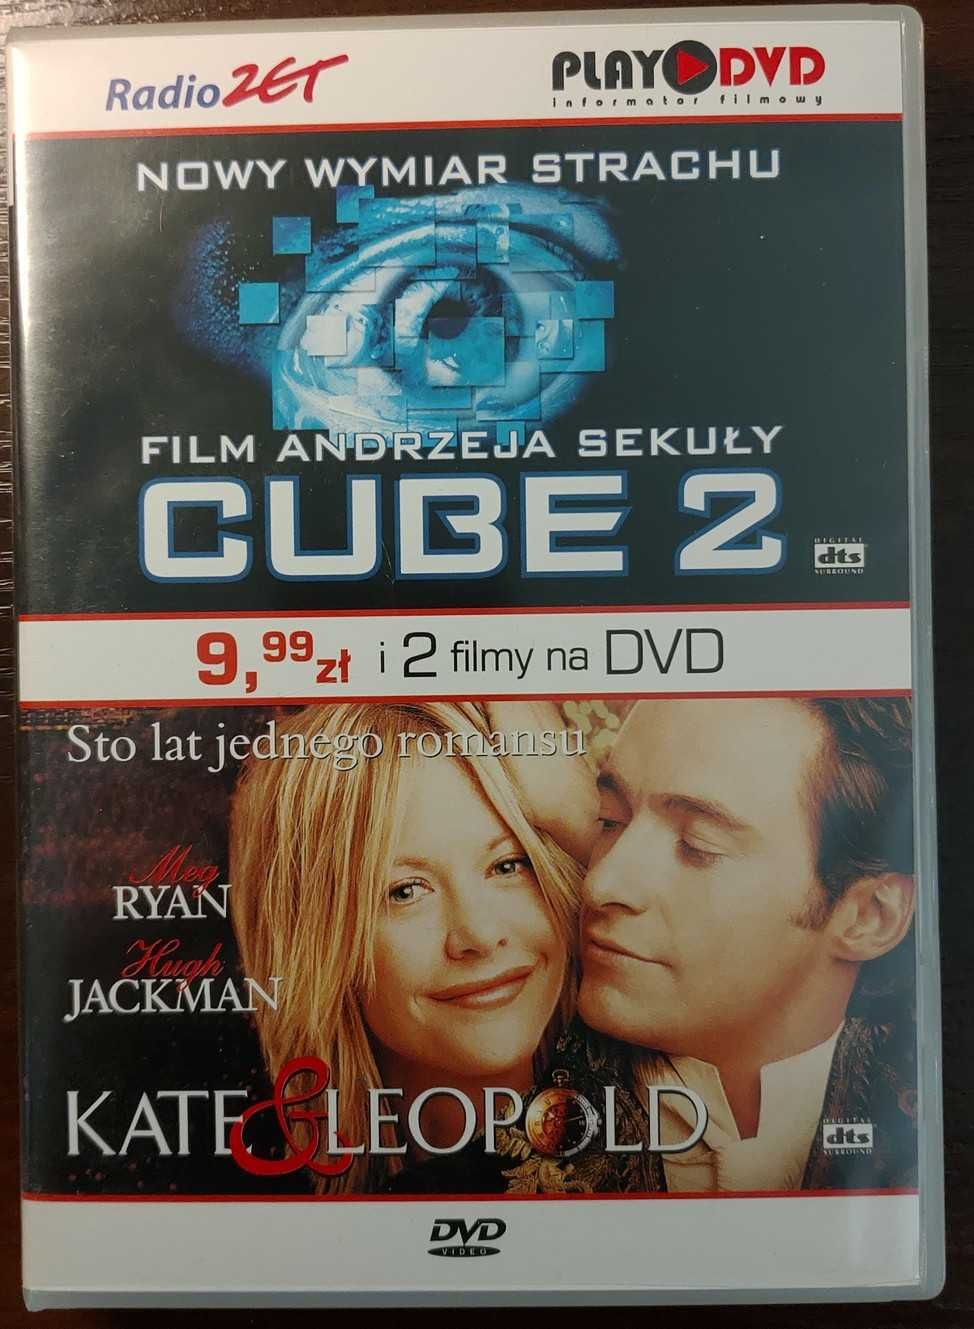 Płyty DVD z filmami Cube 2 i Kate & Leopold + gratis DVD